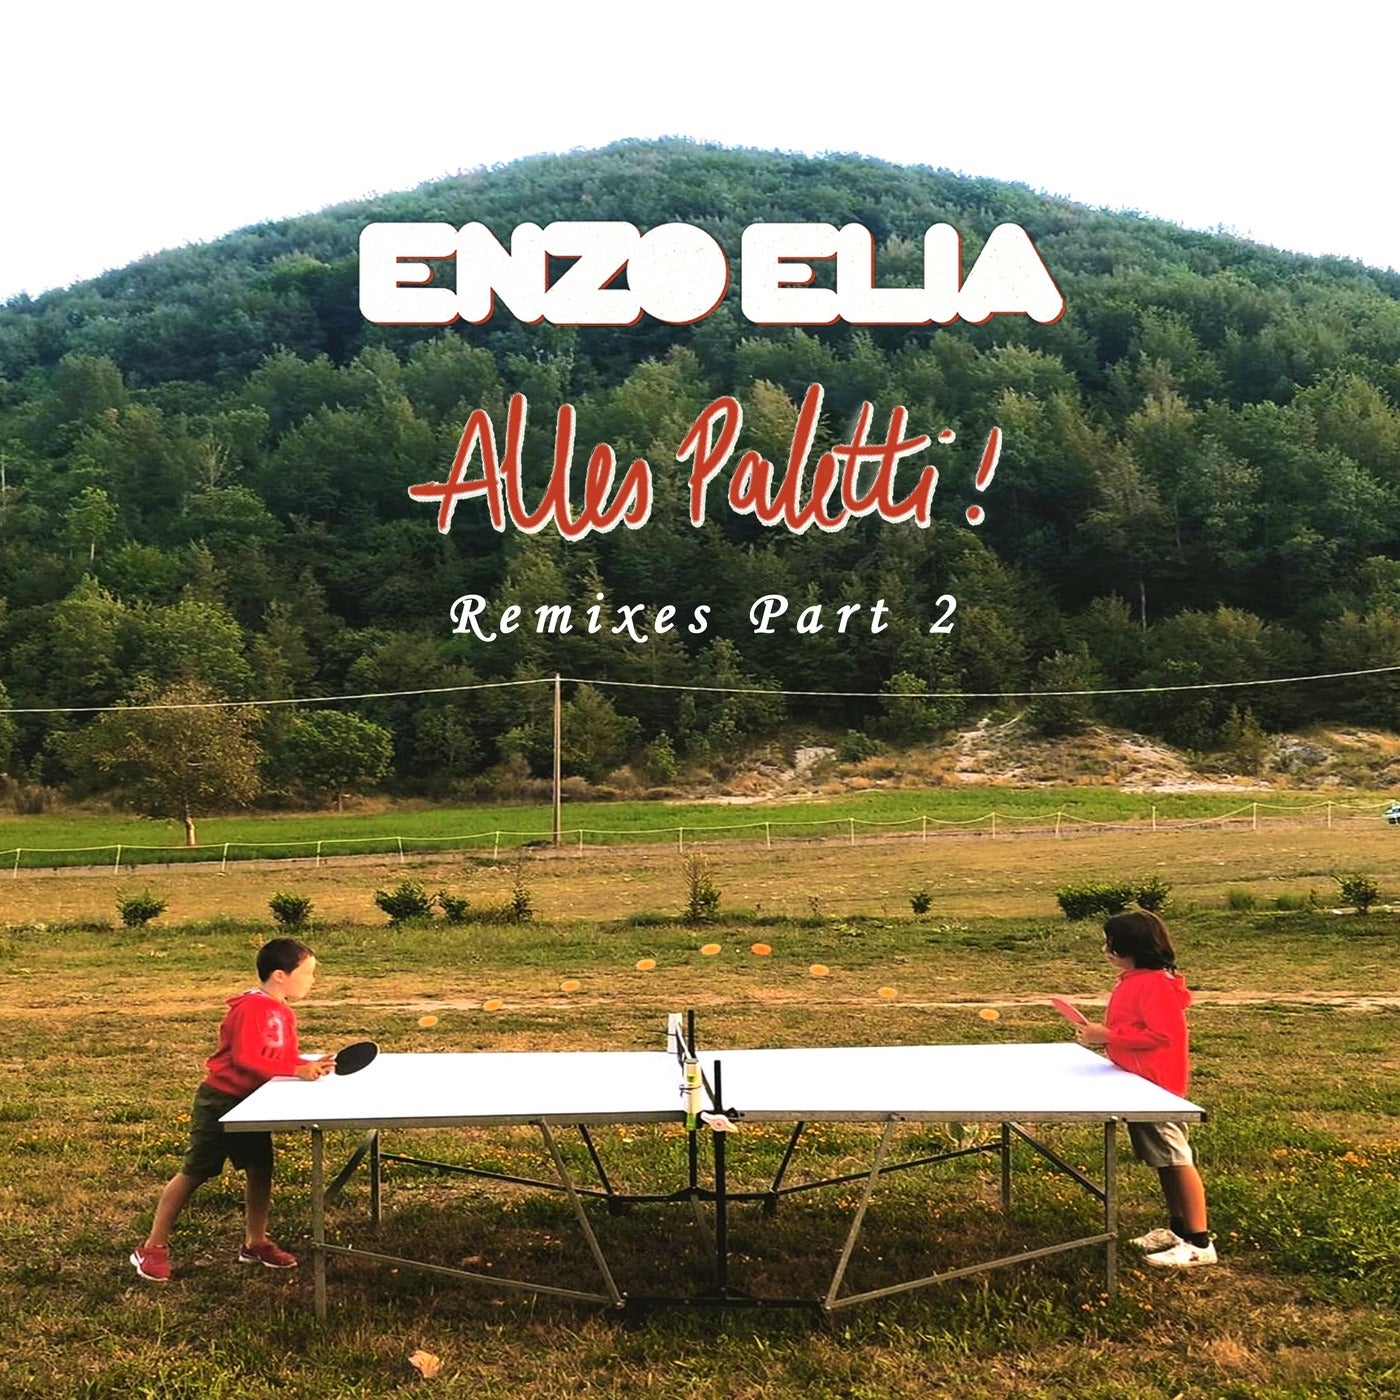 Download Alles Paletti Remixes, Pt. 2 on Electrobuzz